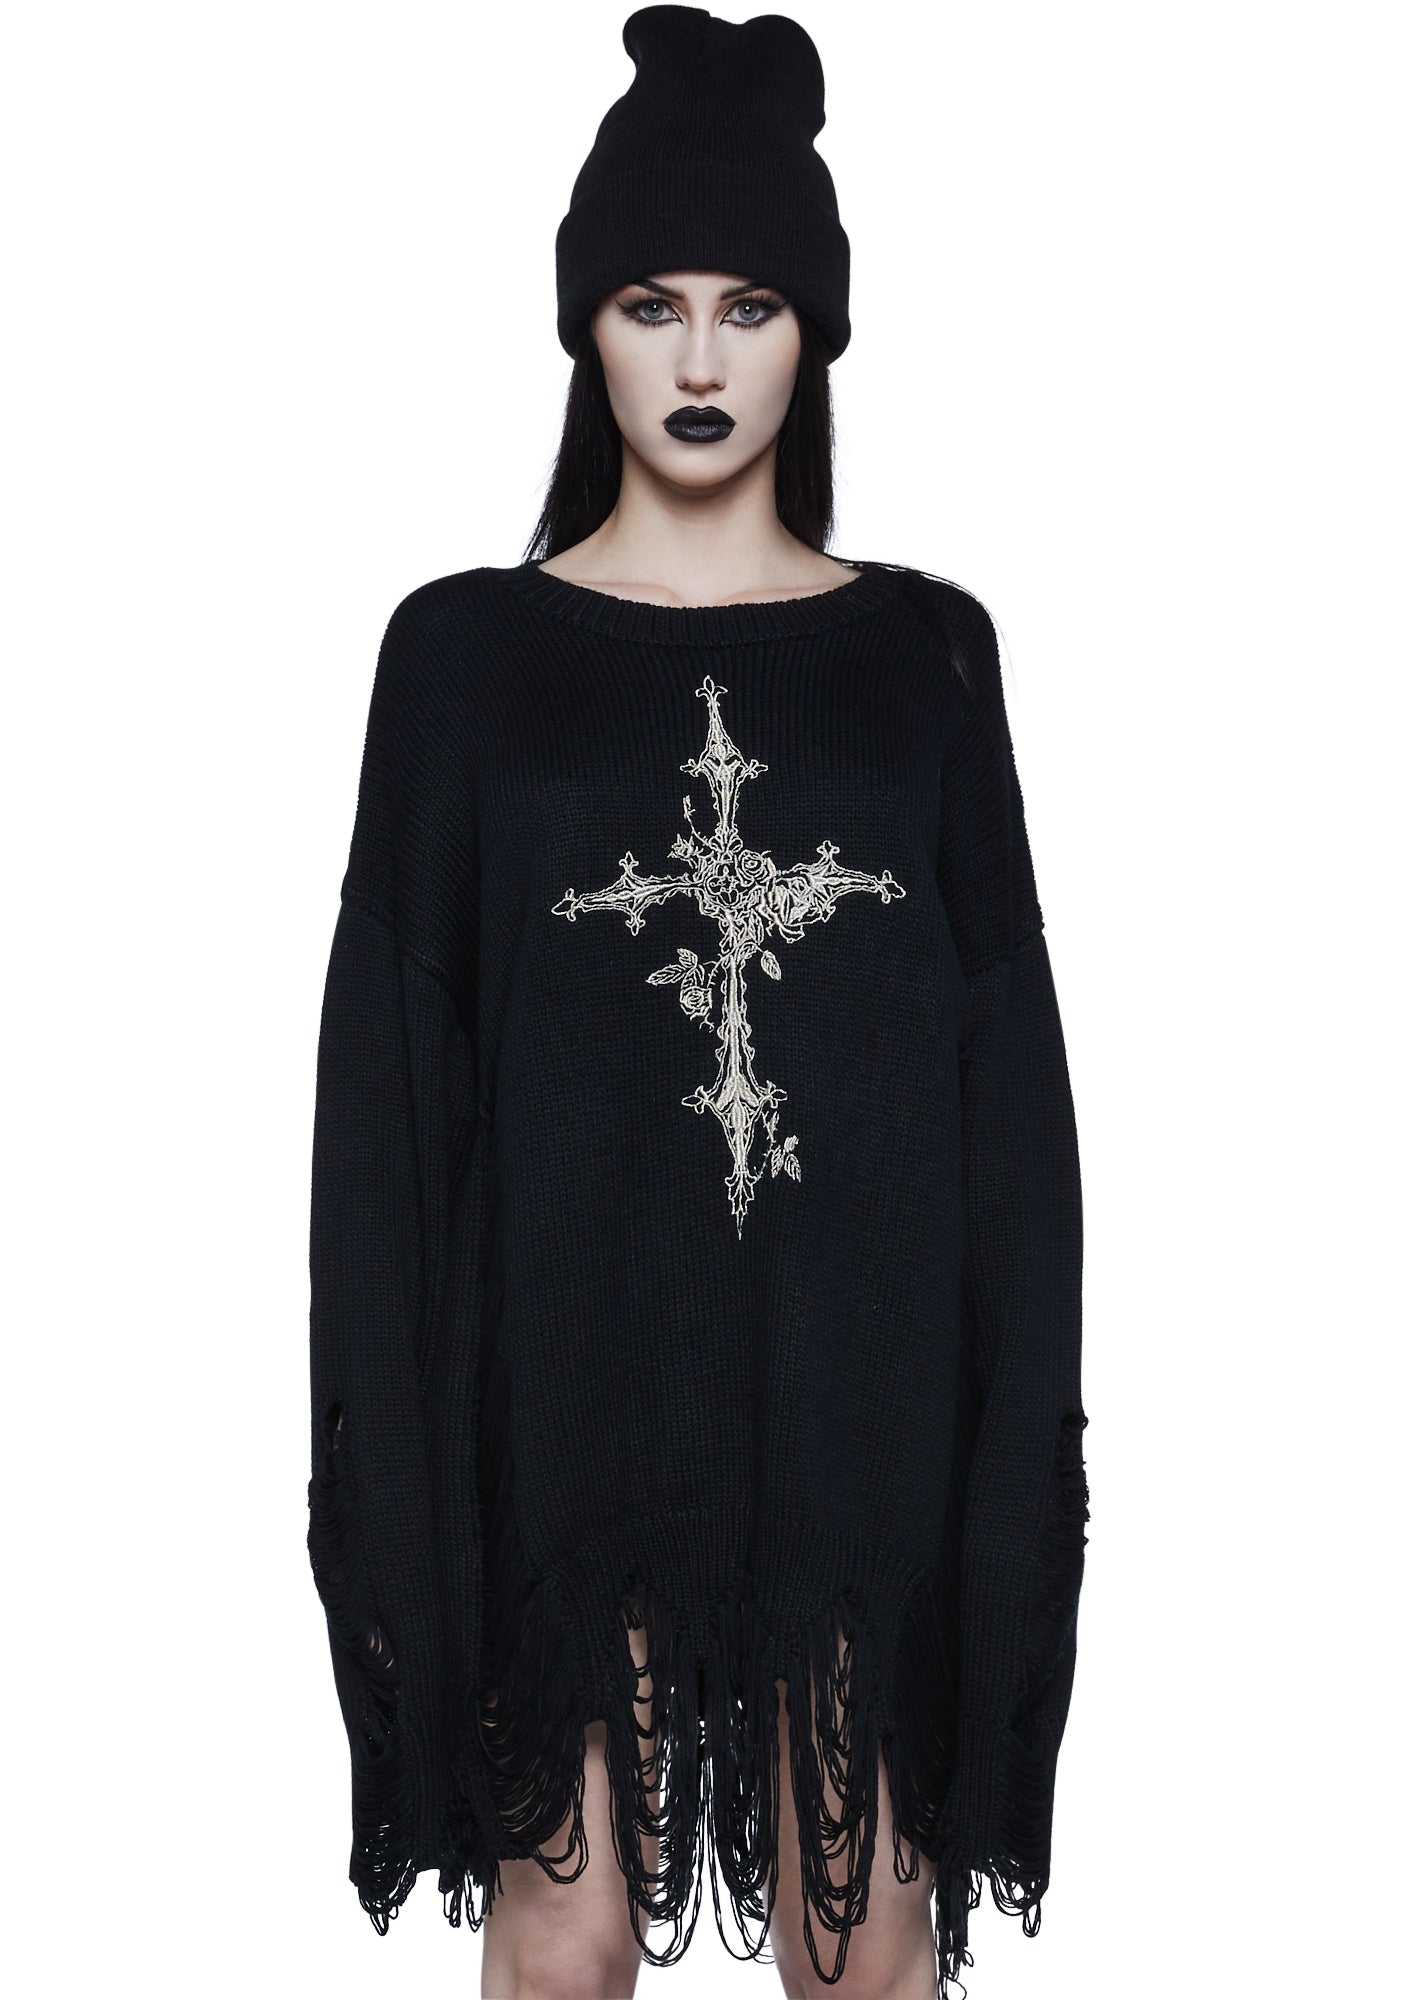 Widow Halloween Distressed Gothic Cross Sweater Dress - Black